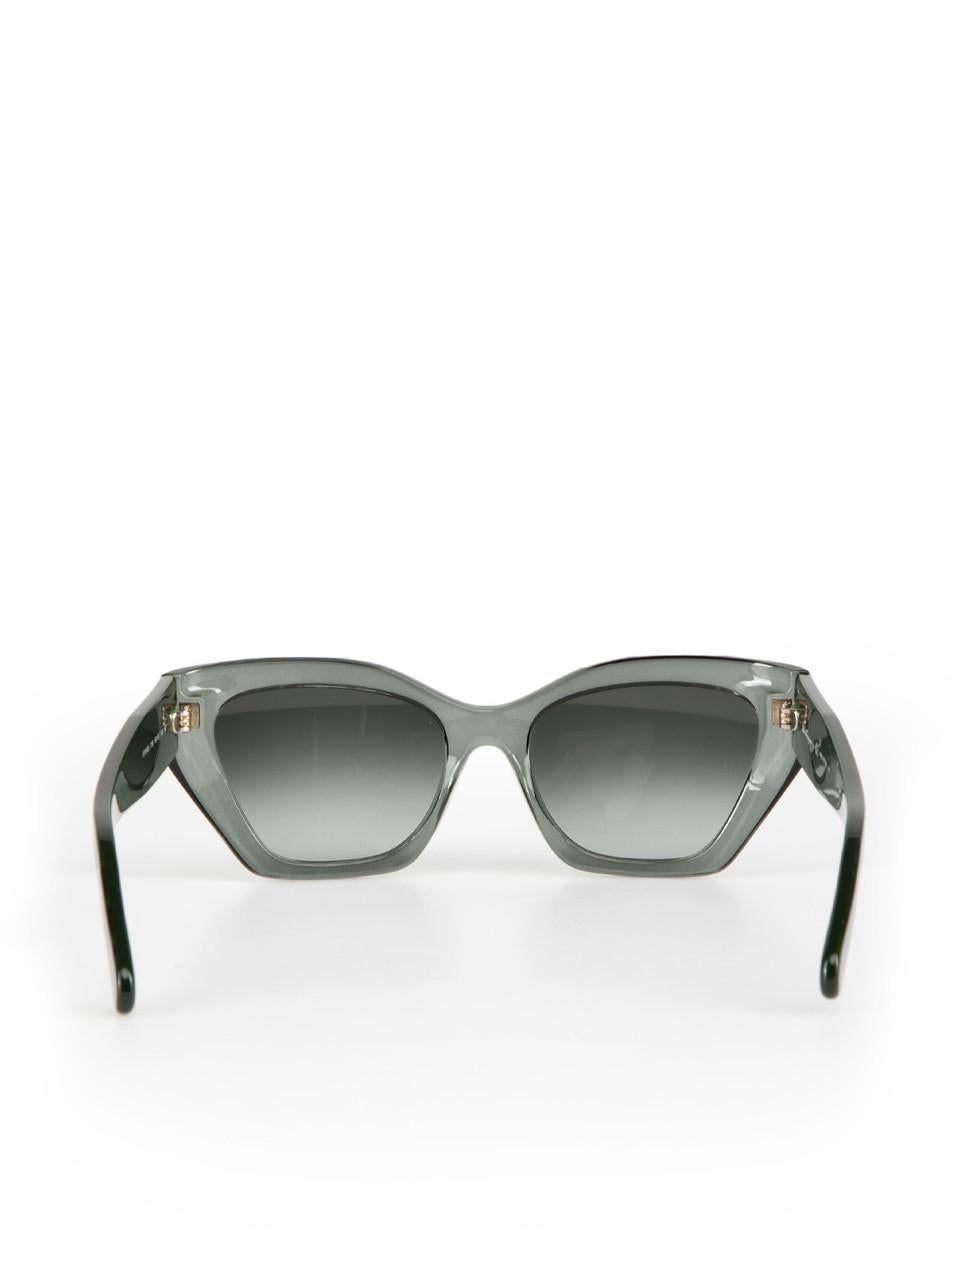 Women's Salvatore Ferragamo Forest Green Transparent Sunglasses For Sale